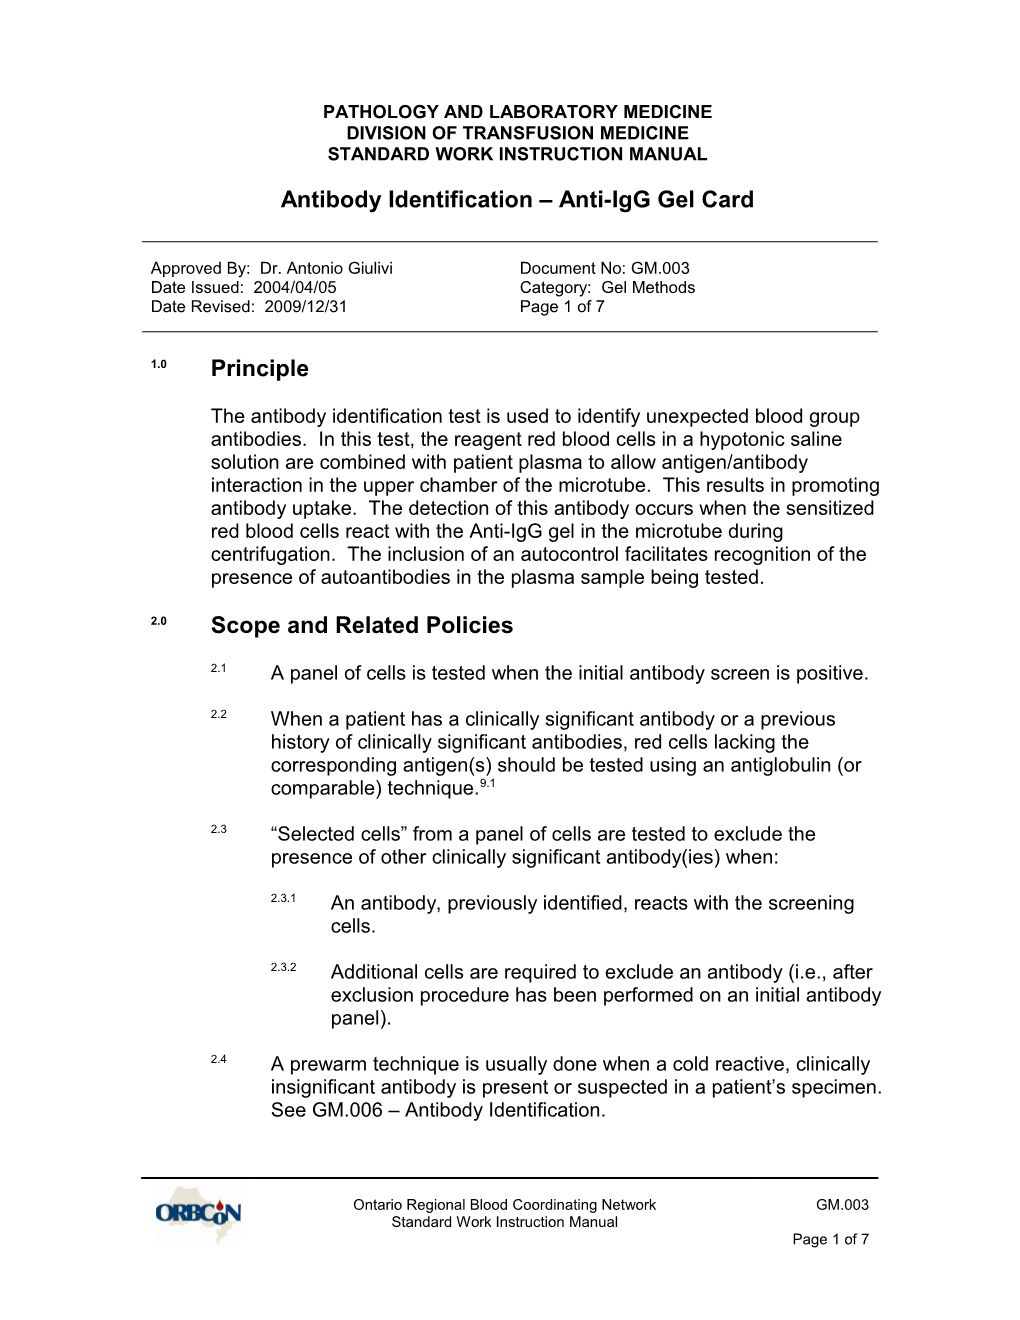 GM.005 Antibody Identification - Anti-Igg Gel Card